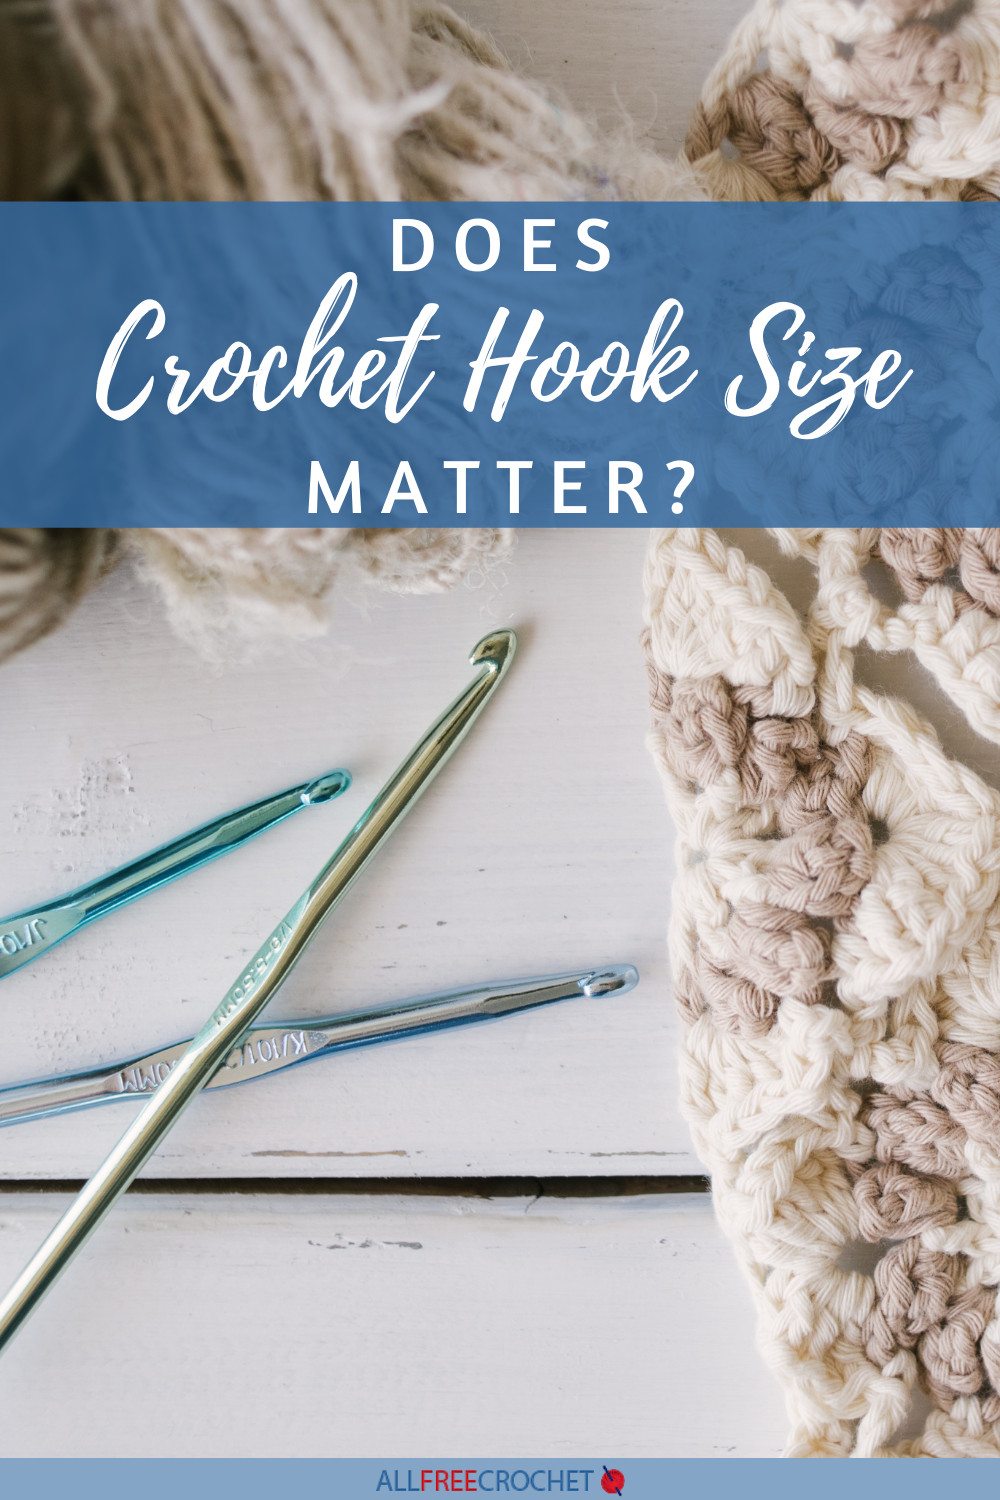 Solved: Does Crochet Hook Size Matter?